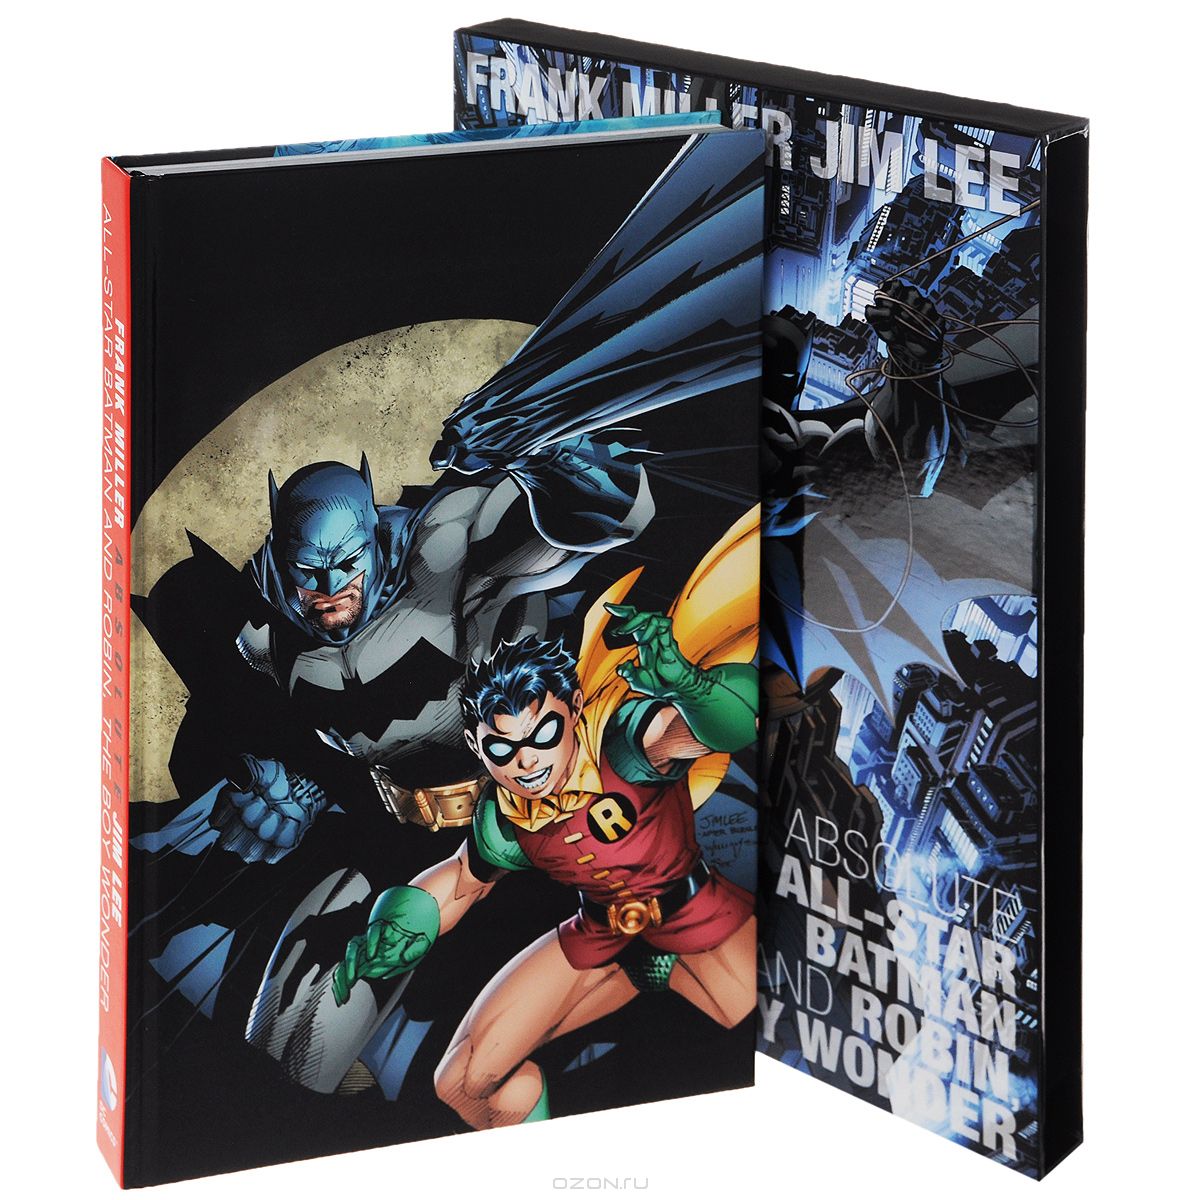 Absolute All-Star Batman And Robin, The Boy Wonder — Фрэнк Миллер